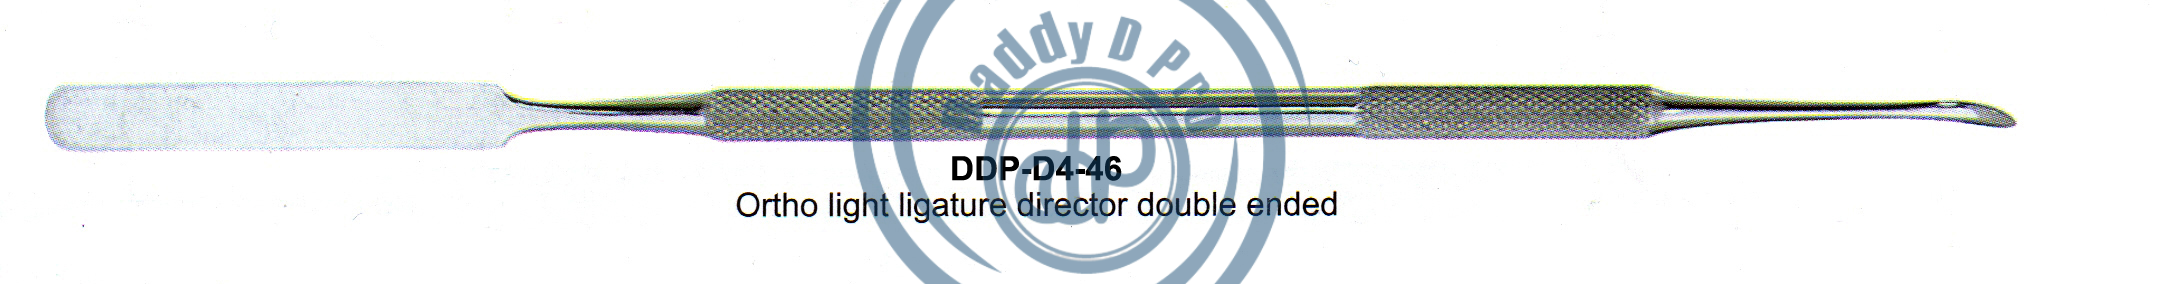 images/DDP-D4-46.png